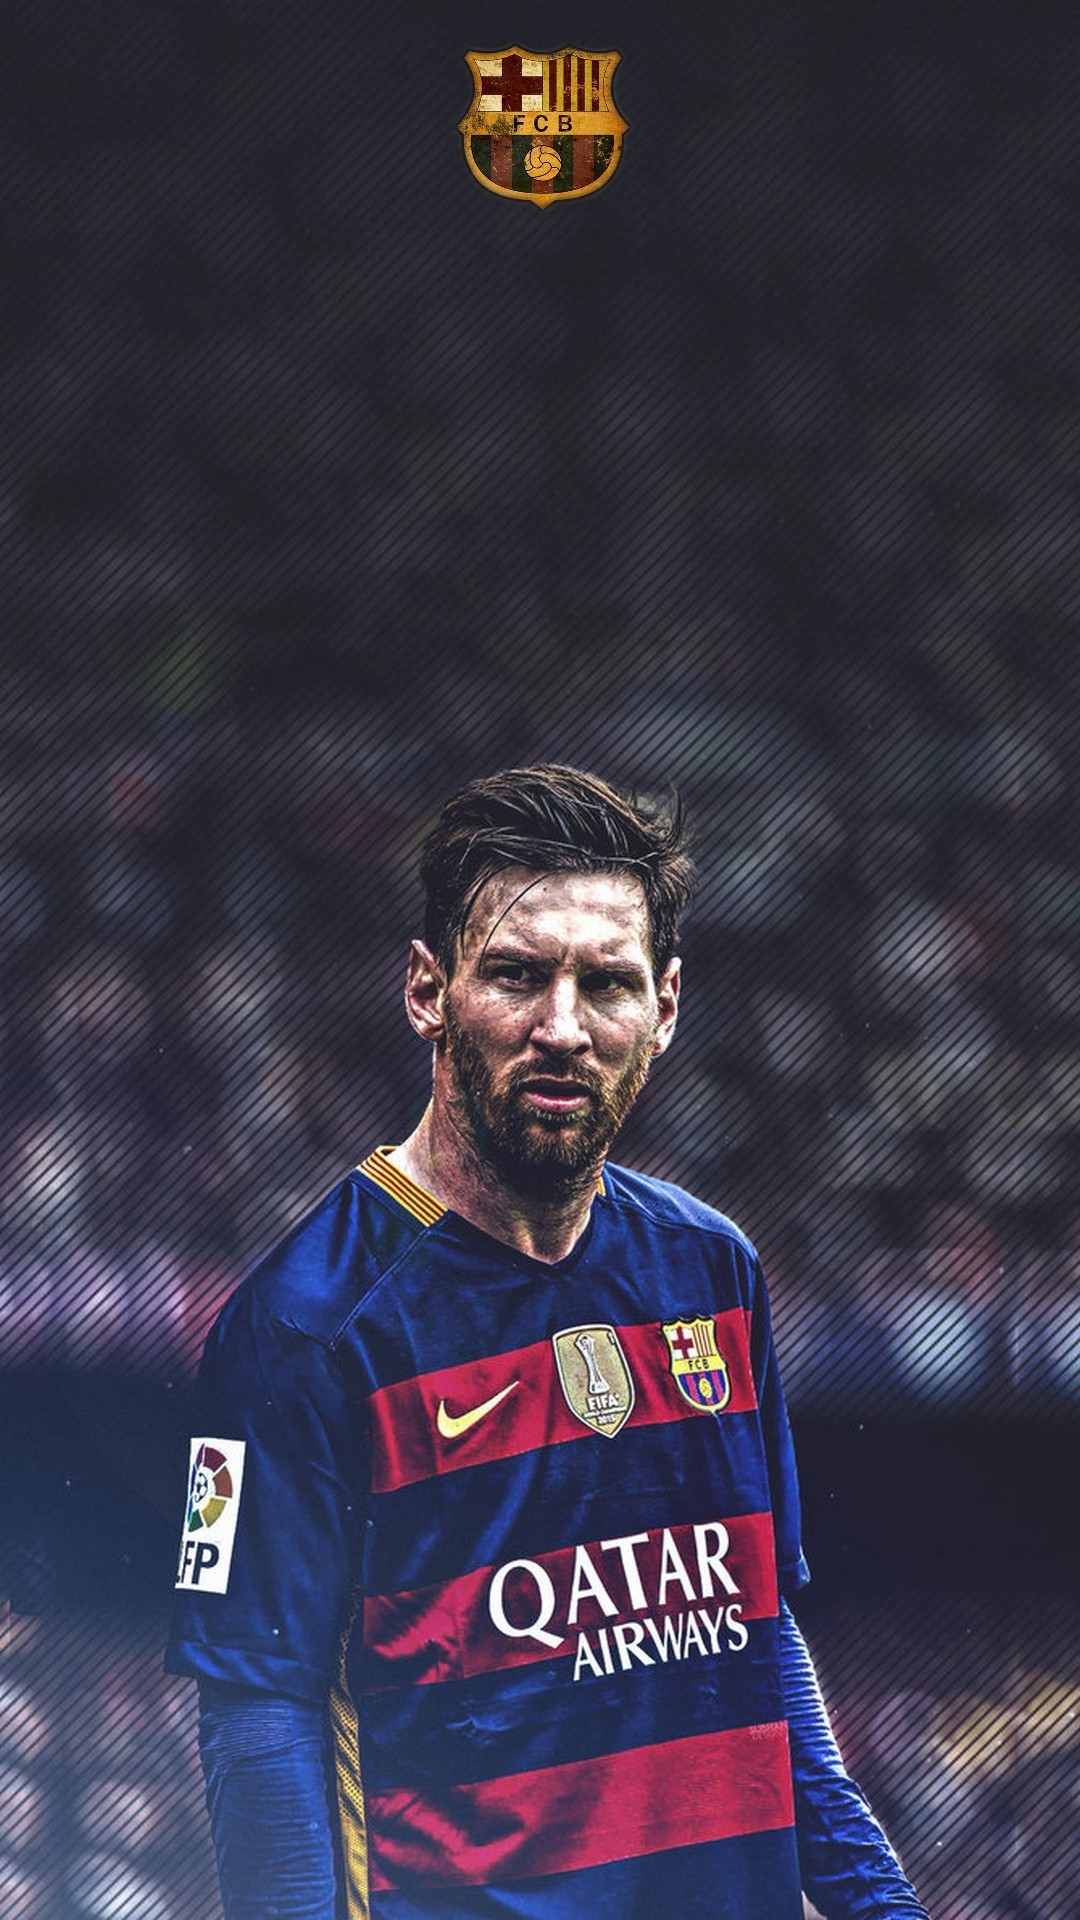 1080x1920 Wallpaper Leo Messi Iphone 2018 Football Wallpapers